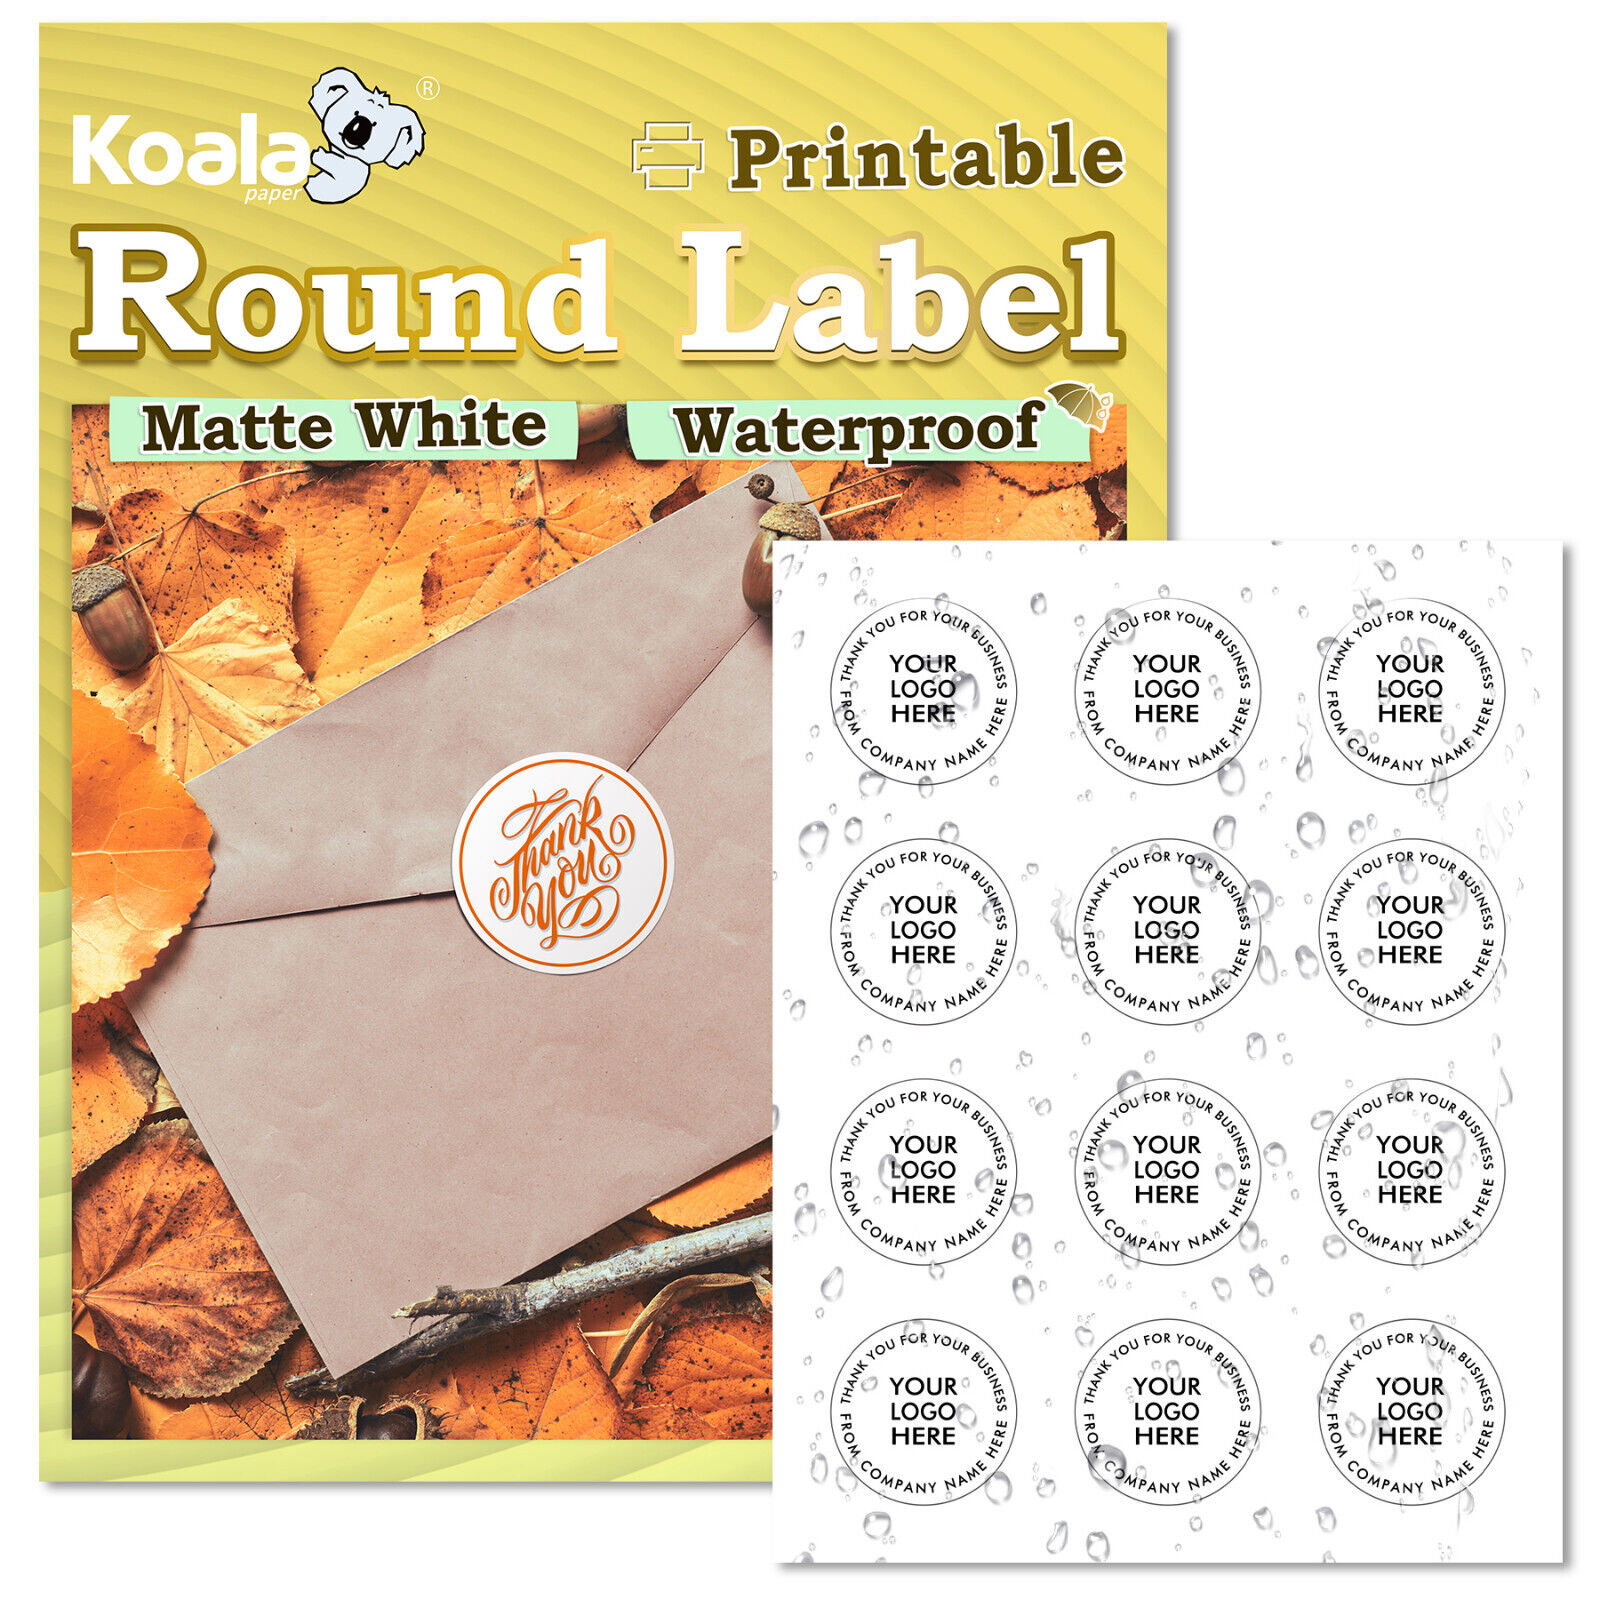 Lot Koala Round Labels 2 Inch Glossy or Matte Waterproof Printable Sticker Paper